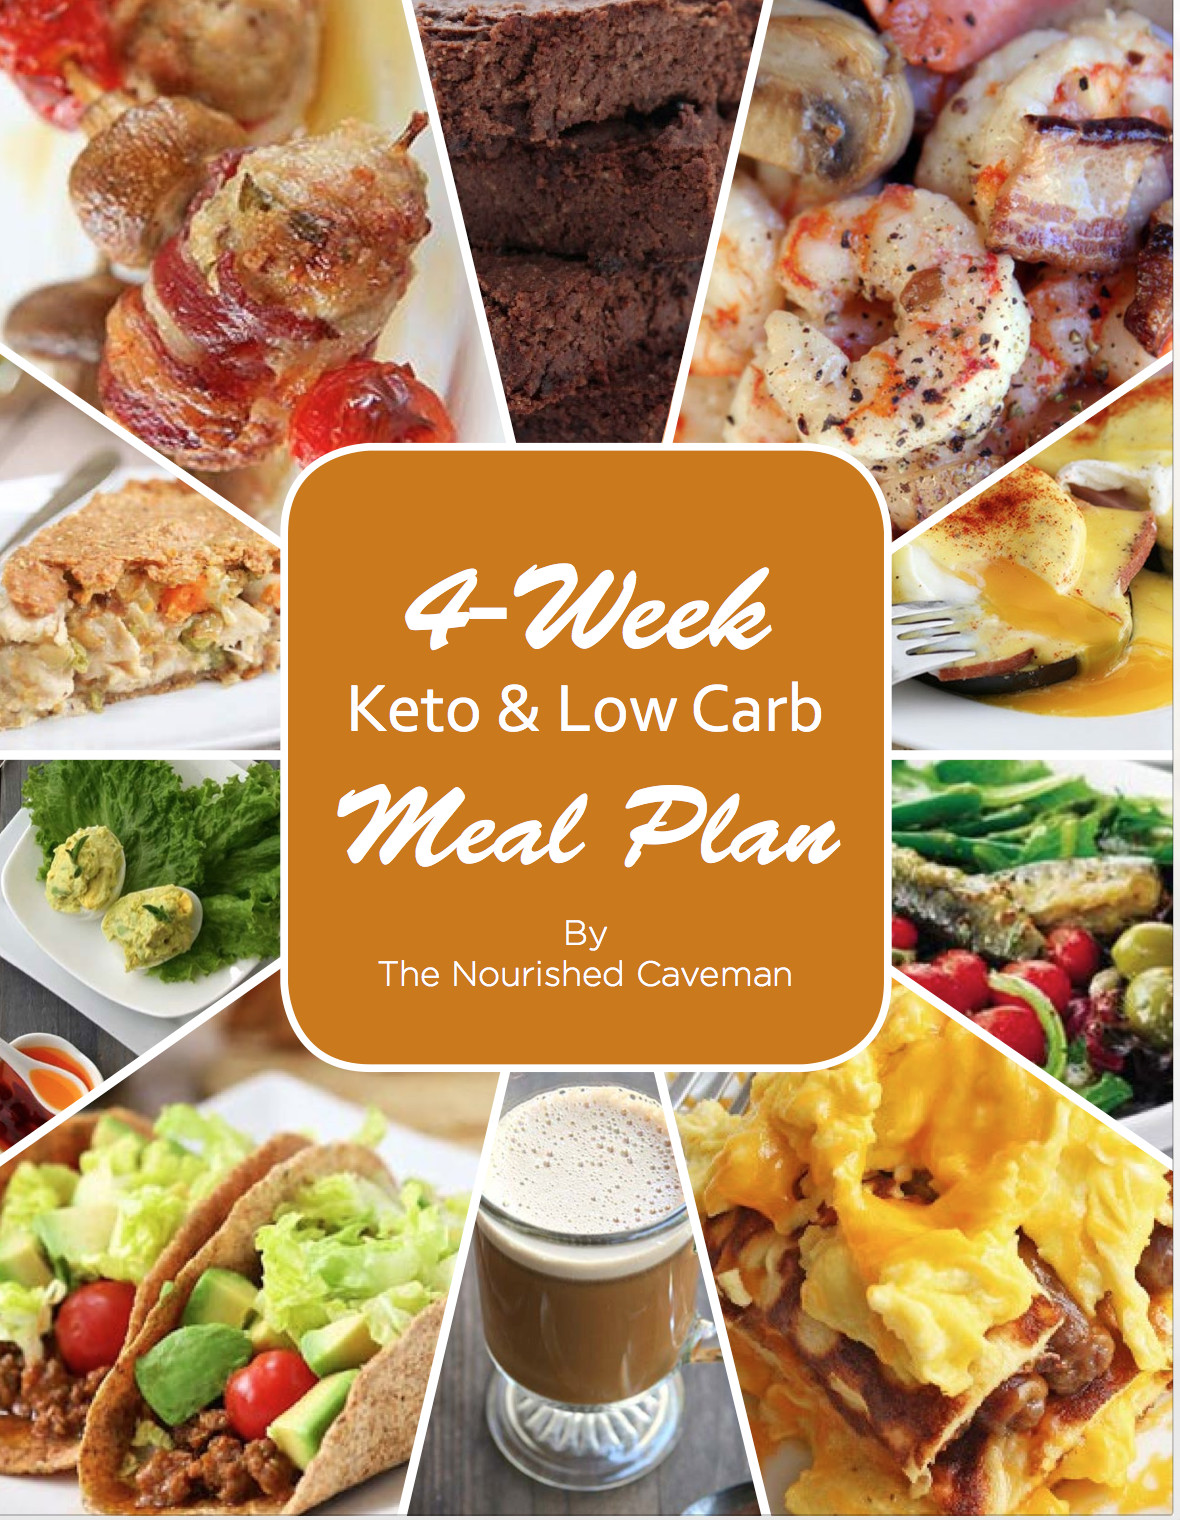 Low Carb Keto Meal Plan
 4 Week Keto & Low Carb Meal Plan The Nourished Caveman